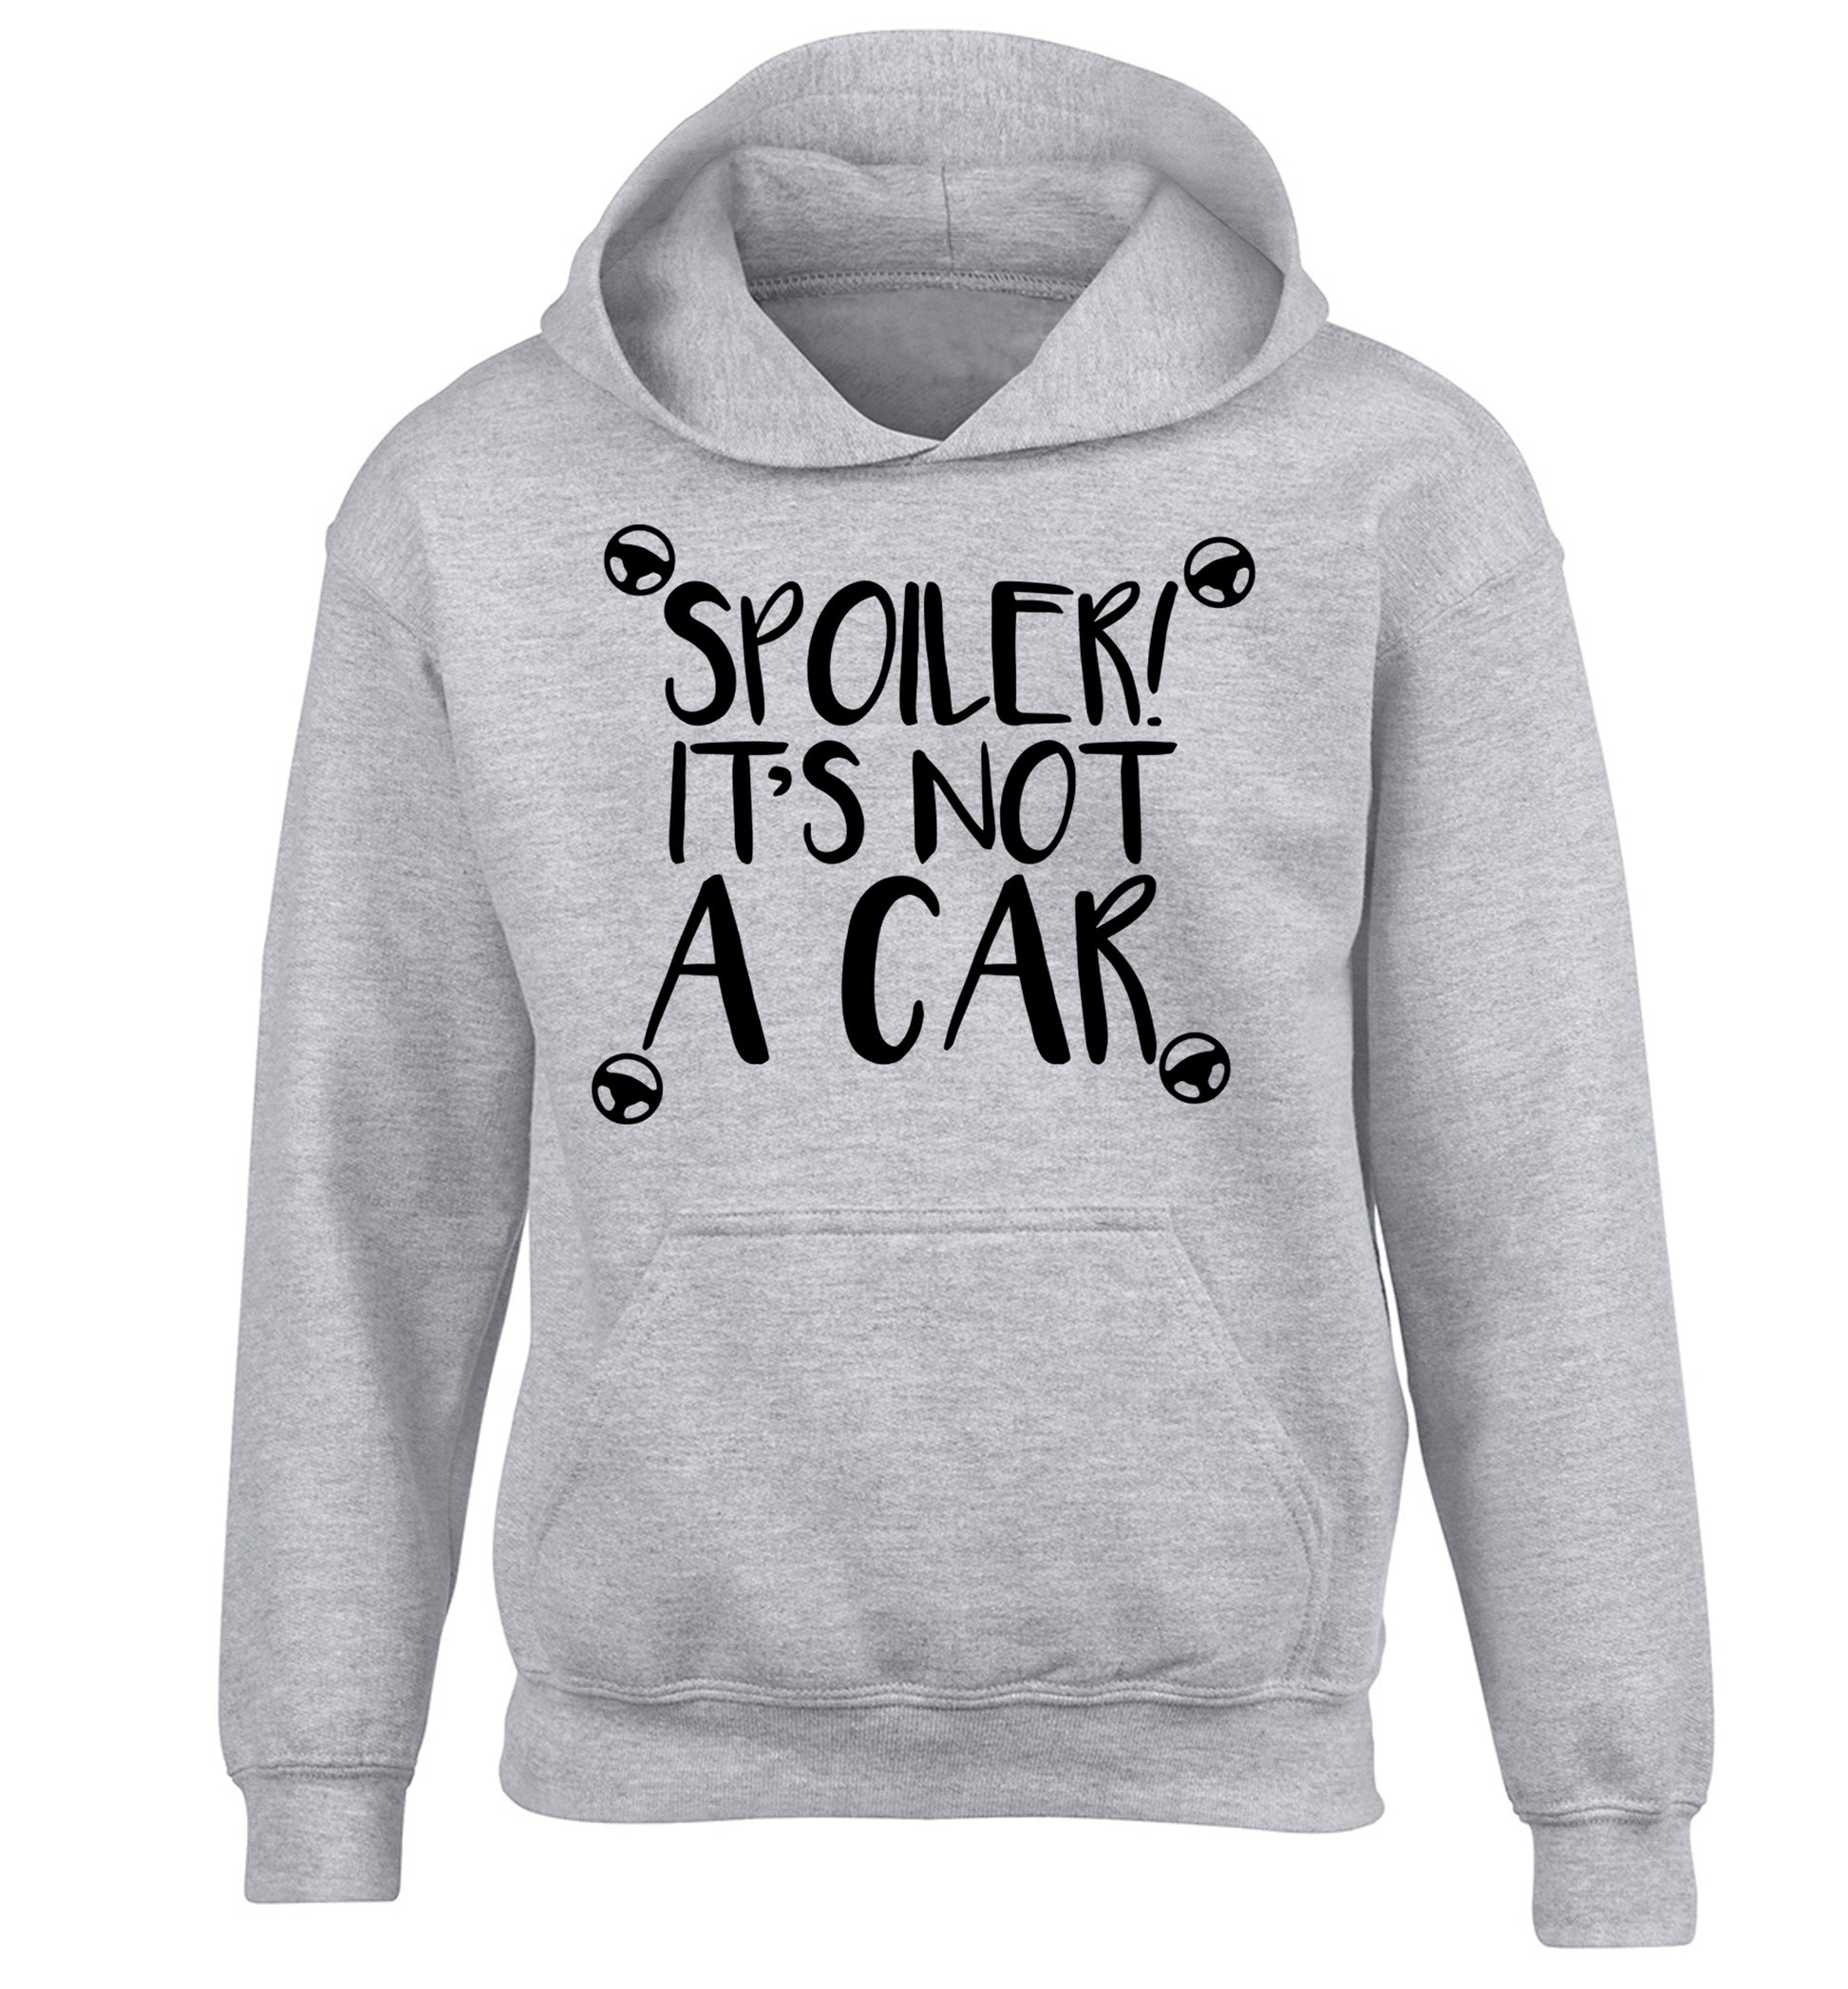 Spoiler it's not a car children's grey hoodie 12-13 Years